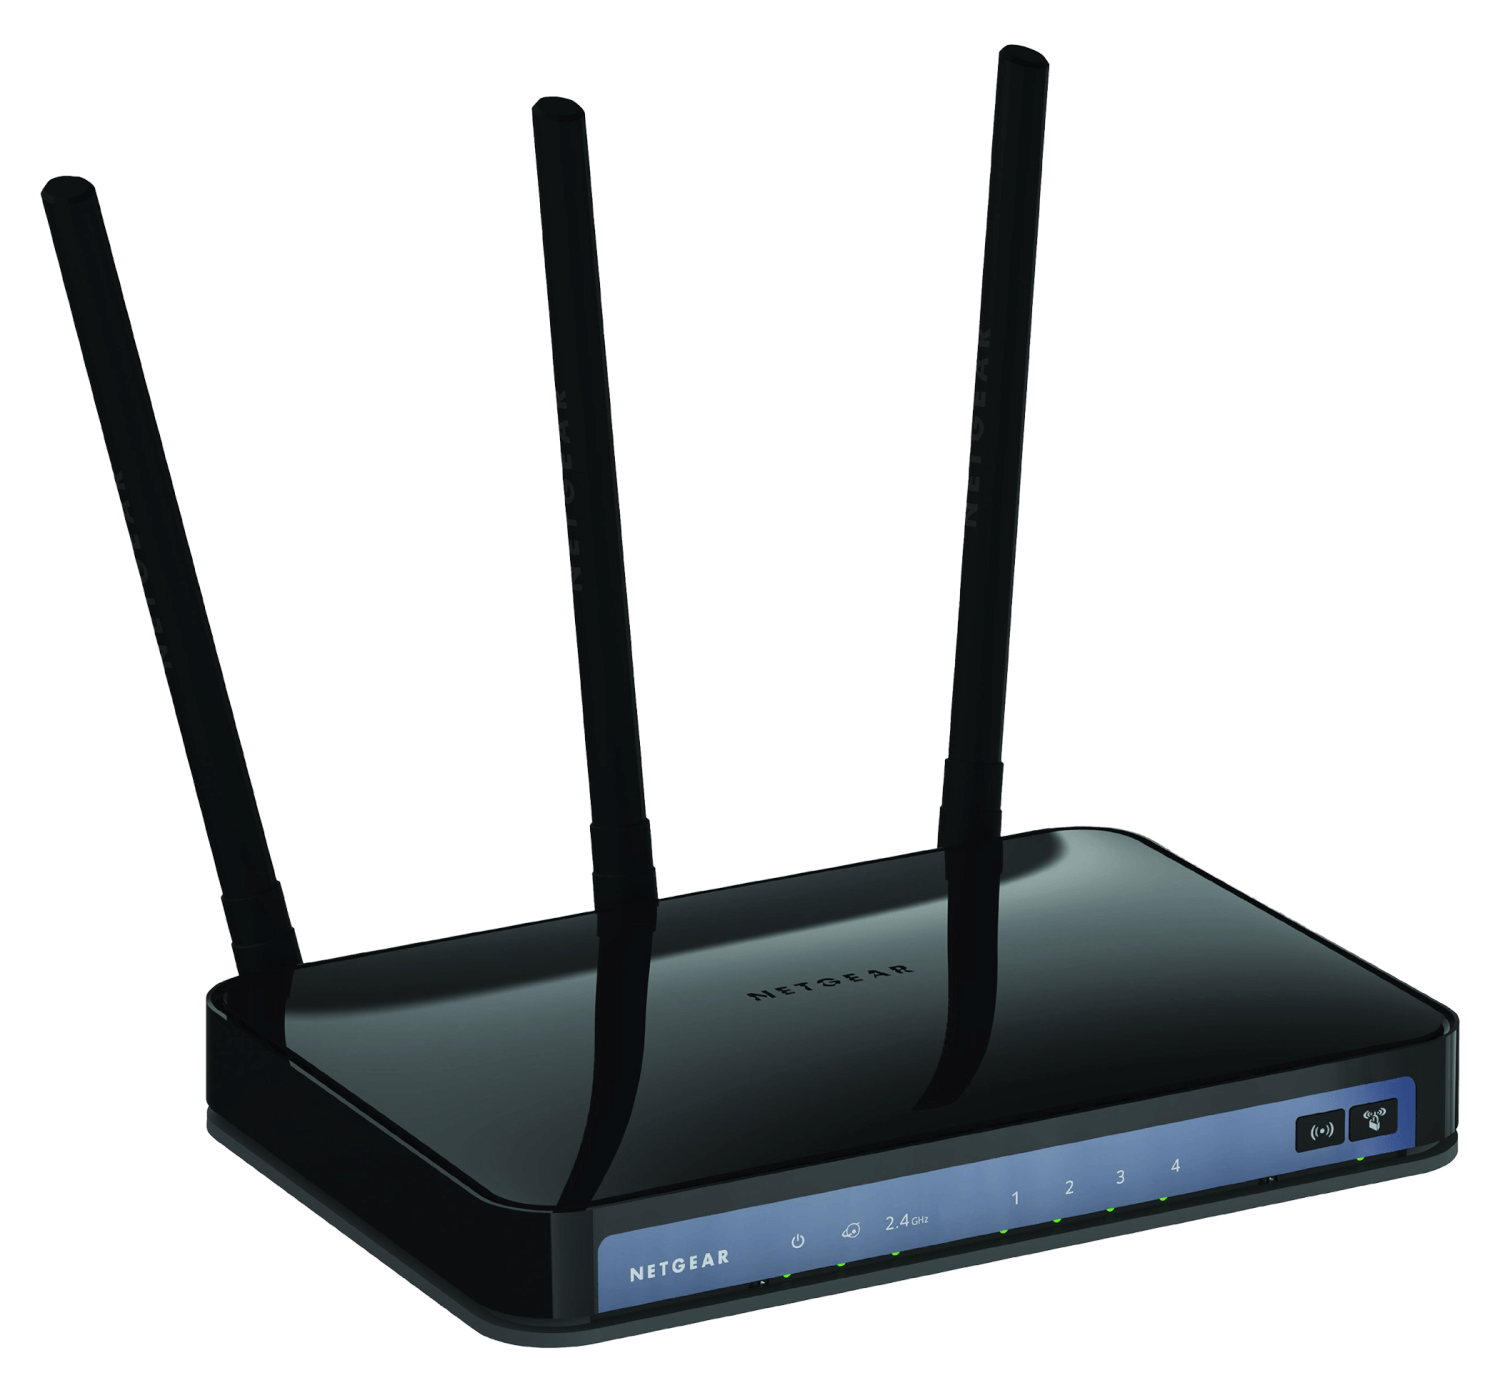 A Netgear 802.11n router featuring multiple antennas